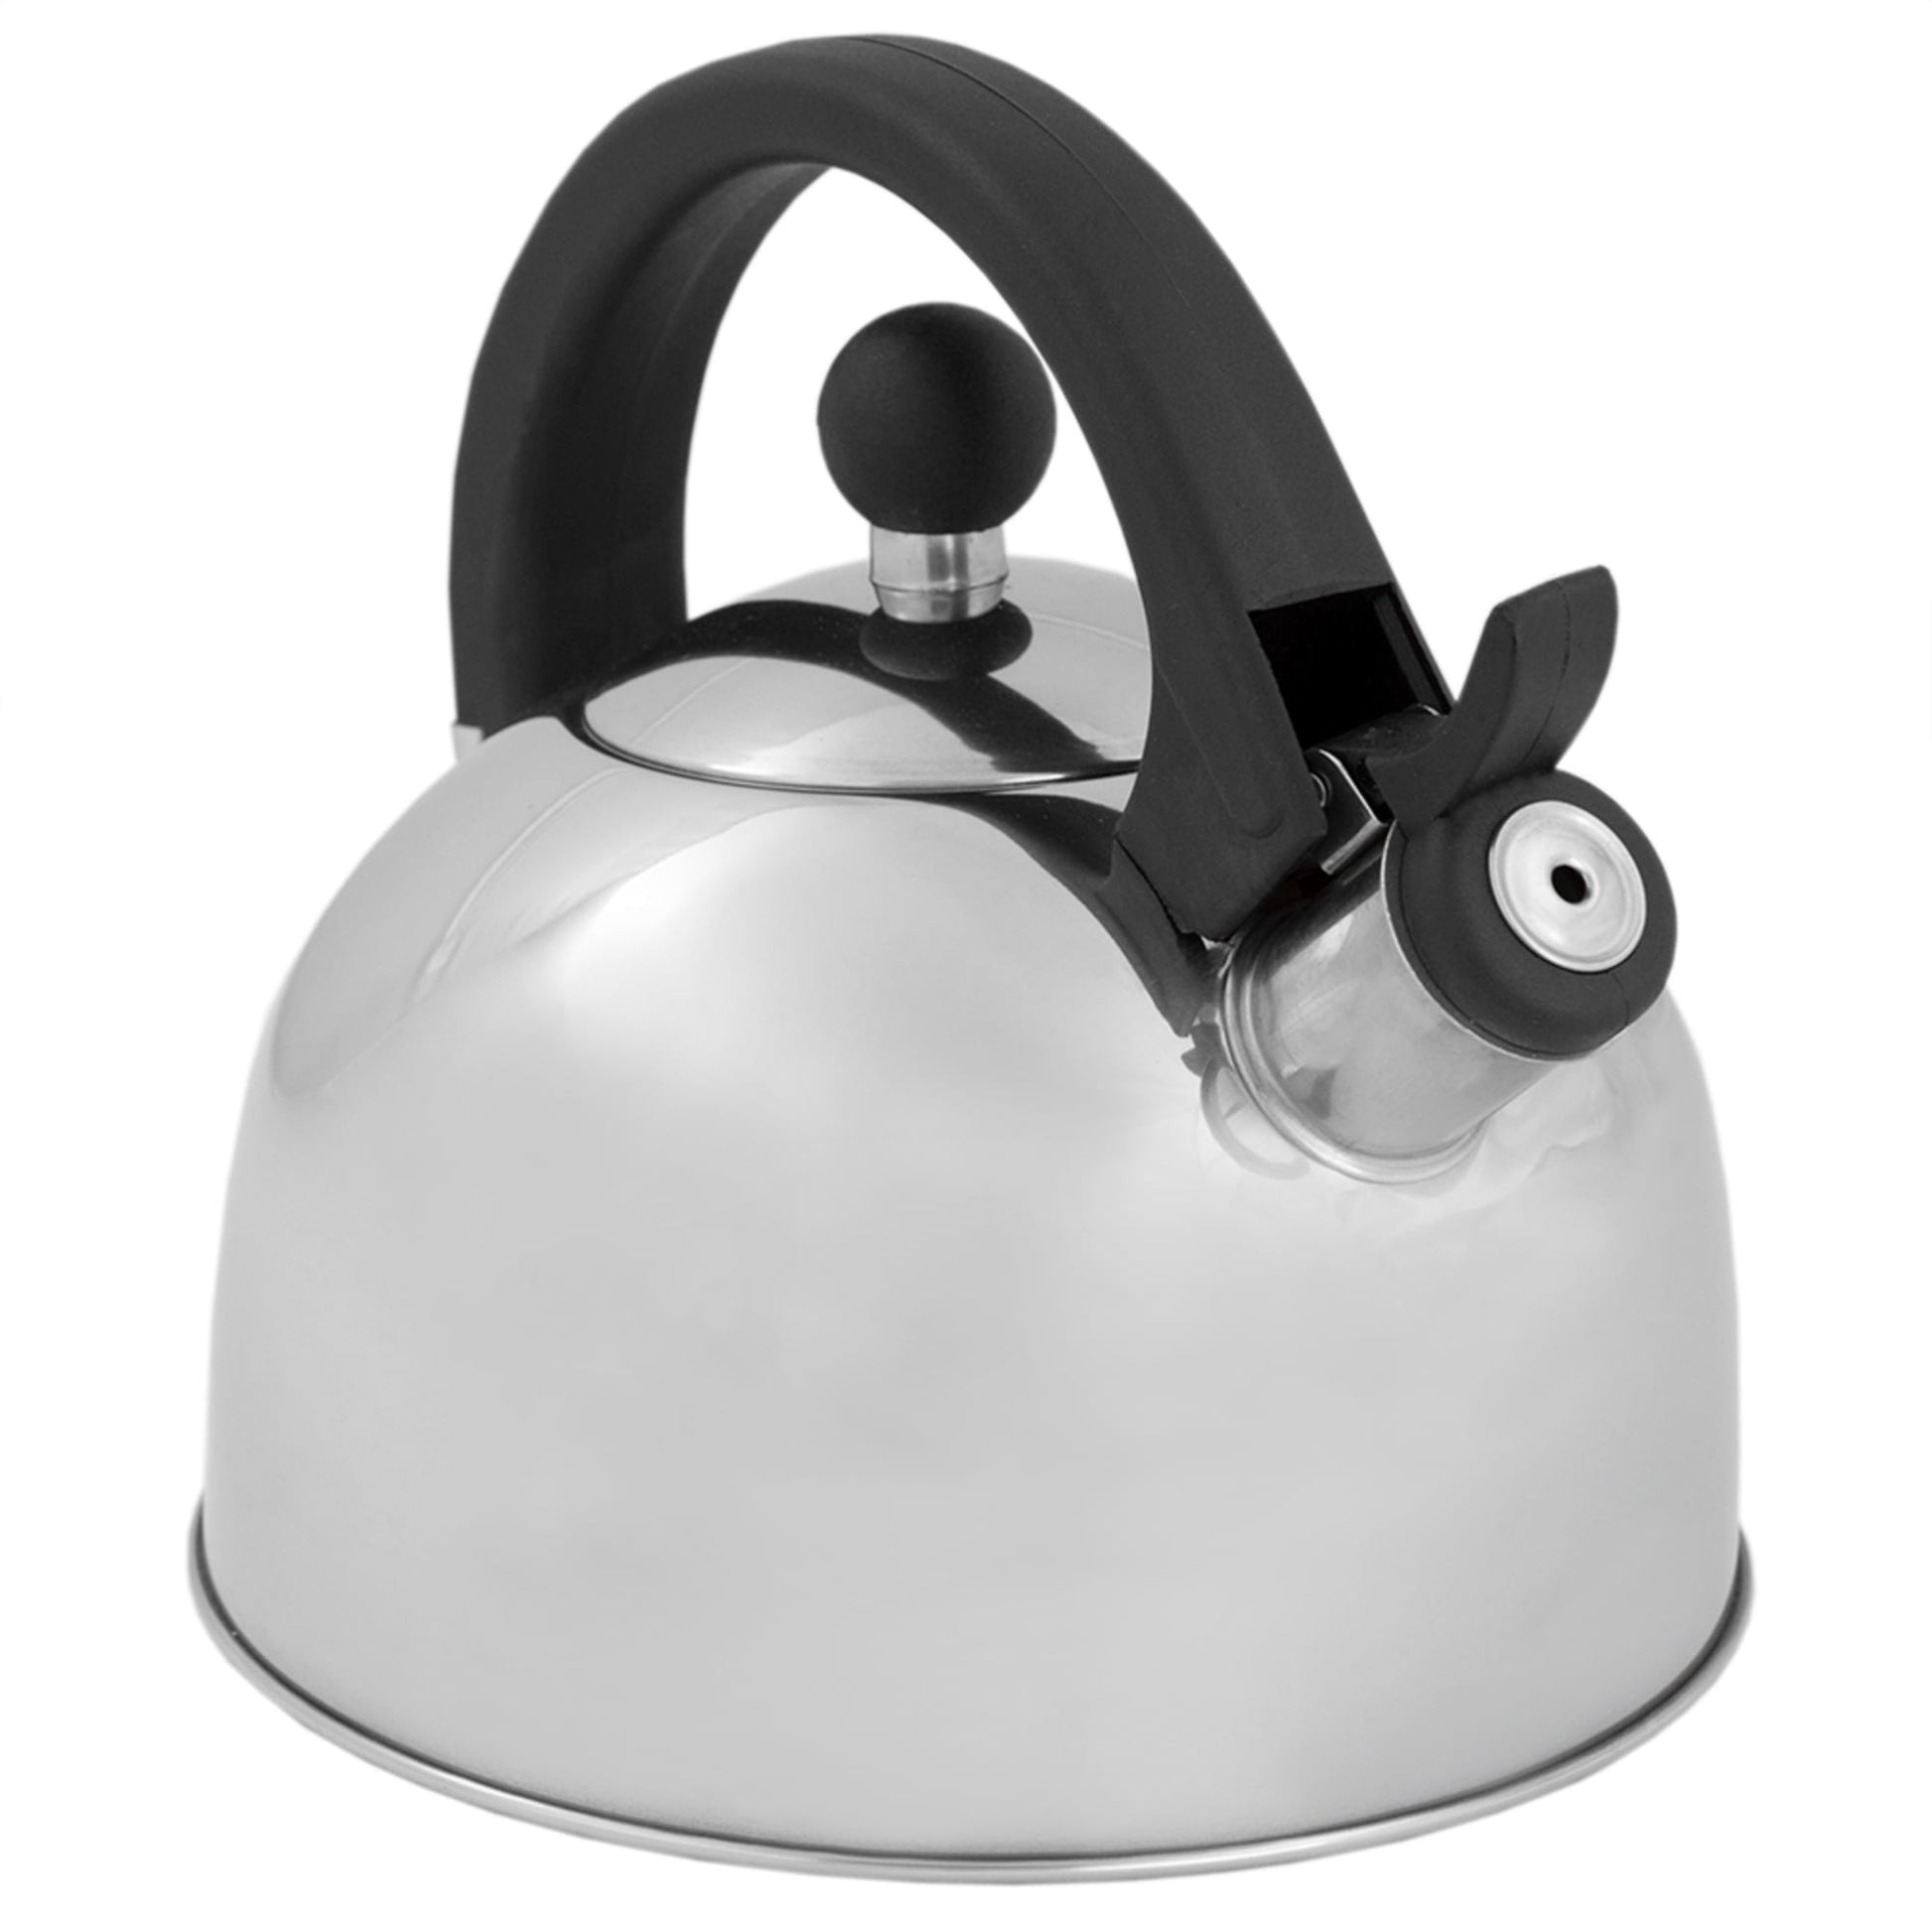 Tohsssik A2.5 Whistling Tea Kettle Stainless Steel Teapot, 2.5